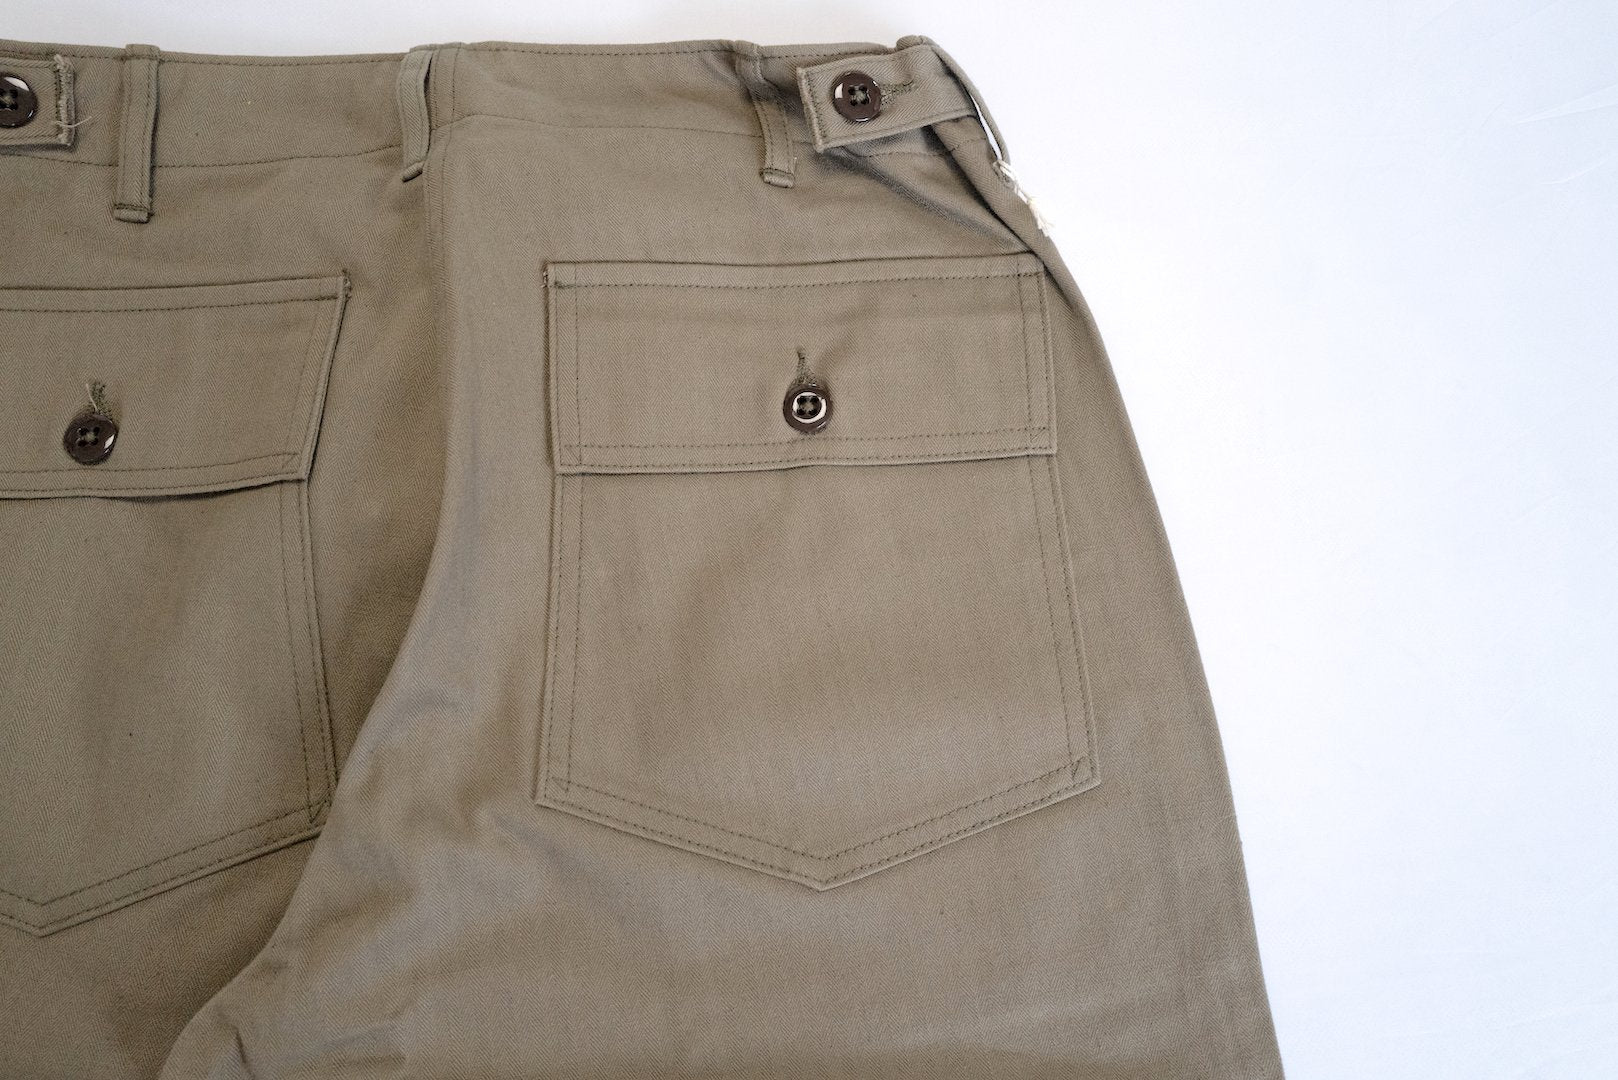 Warehouse 11oz HBT Military Shorts